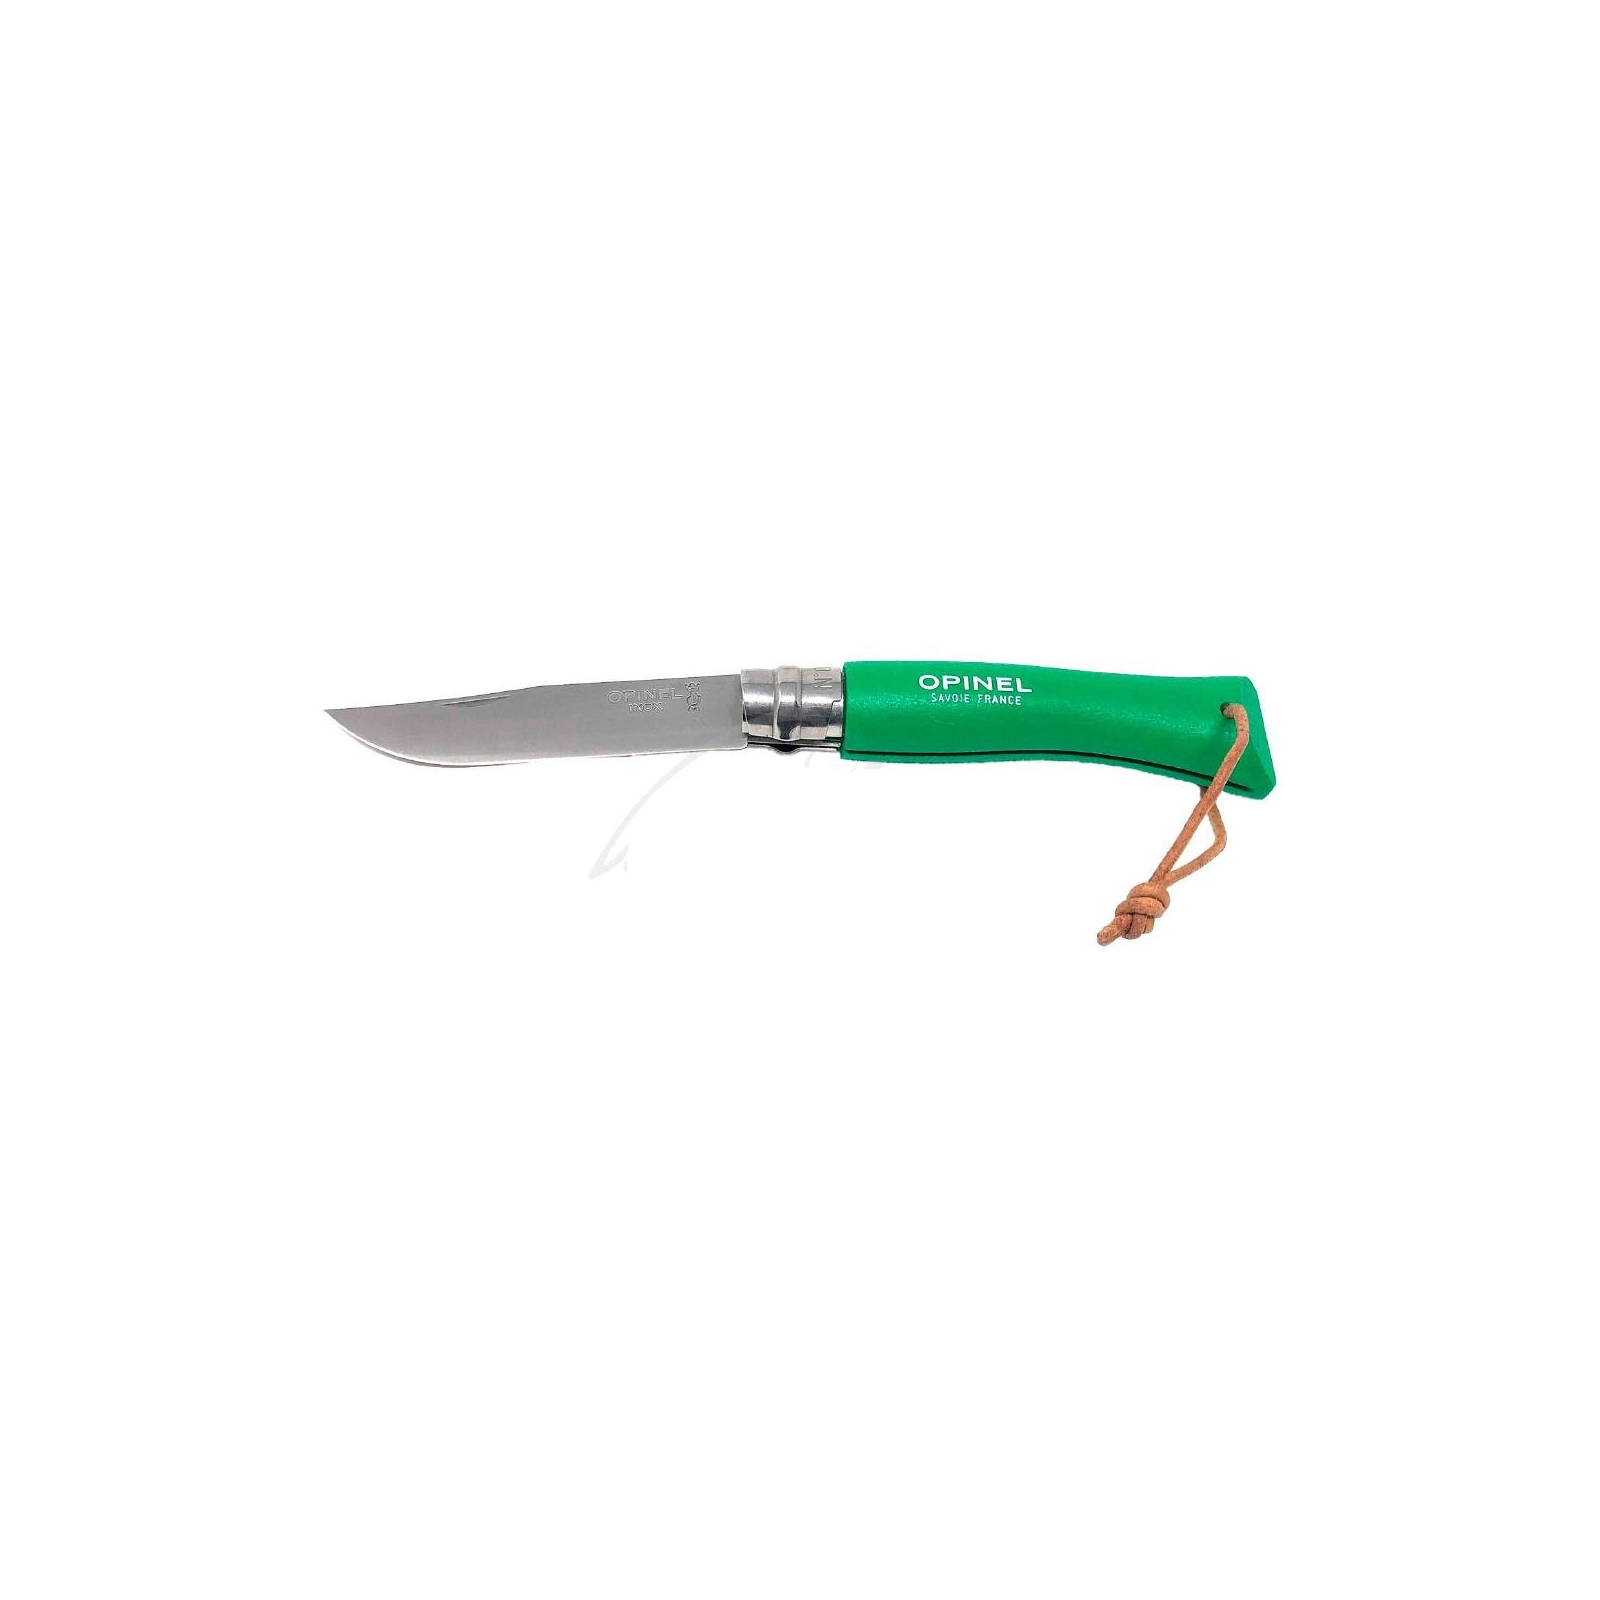 Нож Opinel №7 Inox VRI Trekking зеленый, без упаковки (002210)